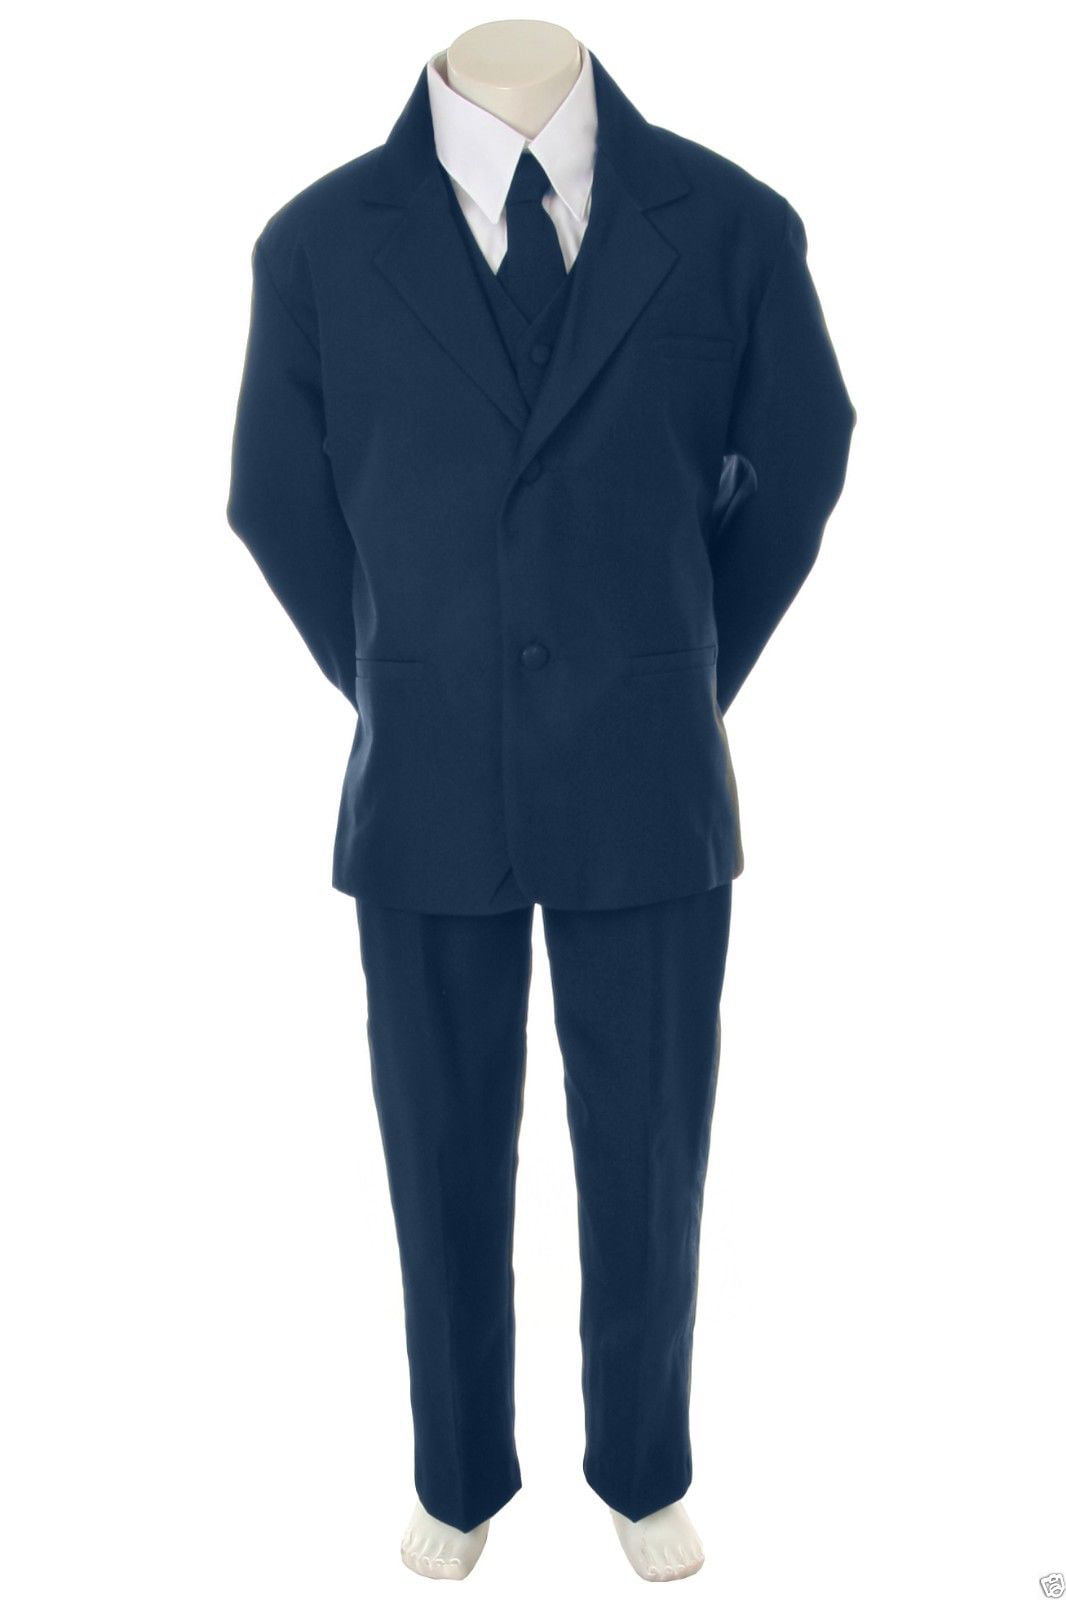 Baby Toddler Kid Teen Boy Wedding Formal Party Navy Blue 5pc Tuxedo Suit sz S-20 